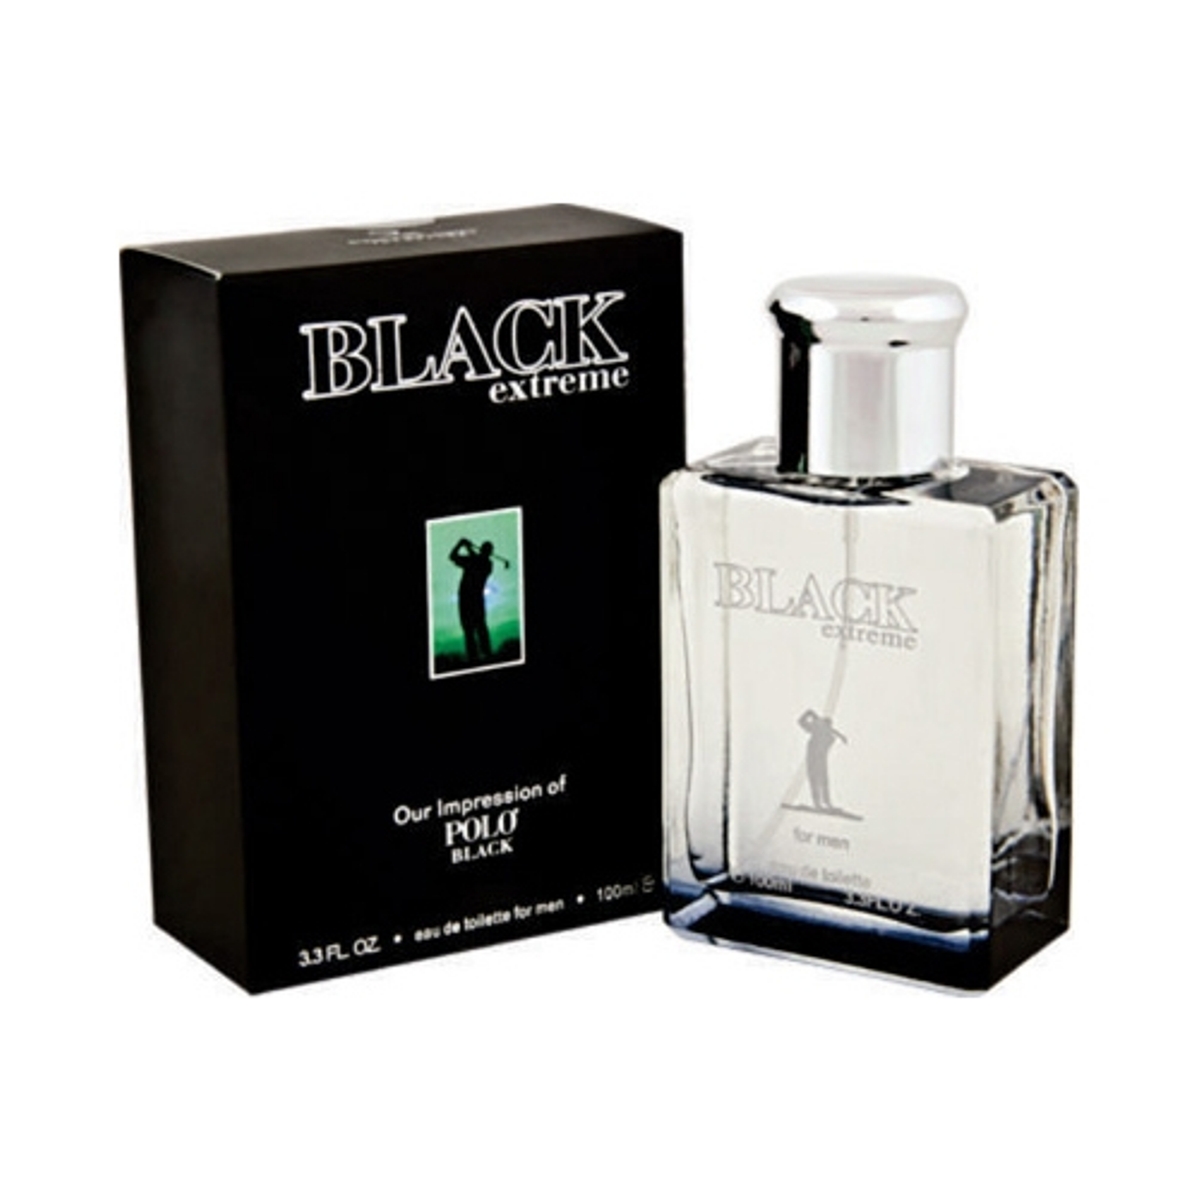 Preferred Fragrance Black Extreme - Our Impression Of Polo Black, 3.3 fl oz